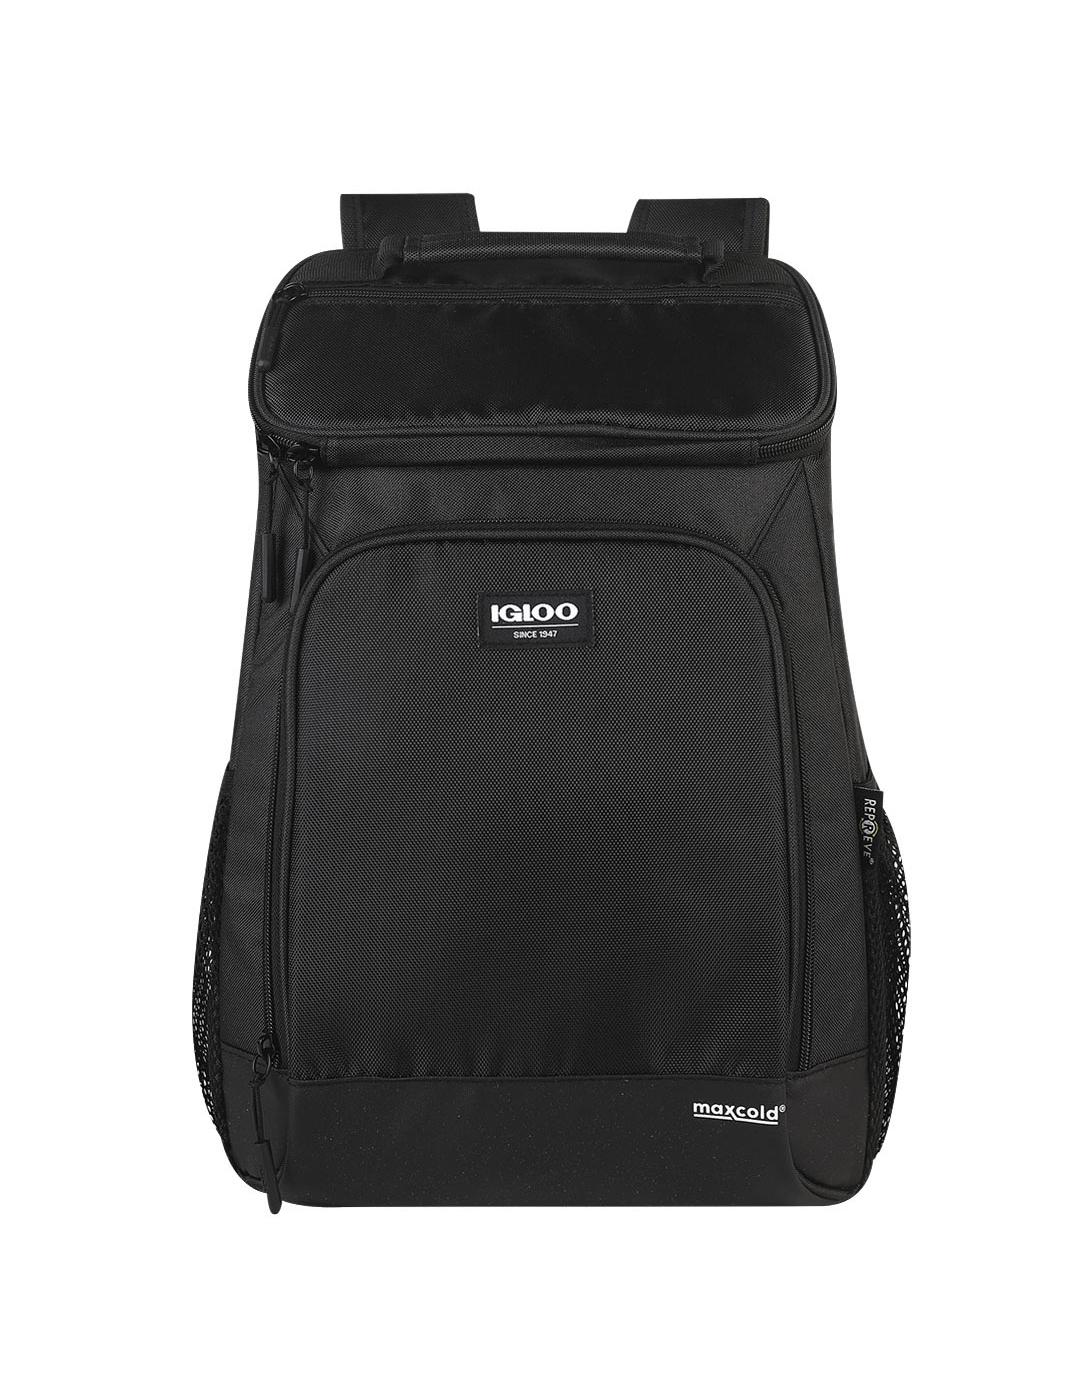 Igloo Evergreen Black Top Grip Backpack - Shop Coolers & Ice Packs at H-E-B